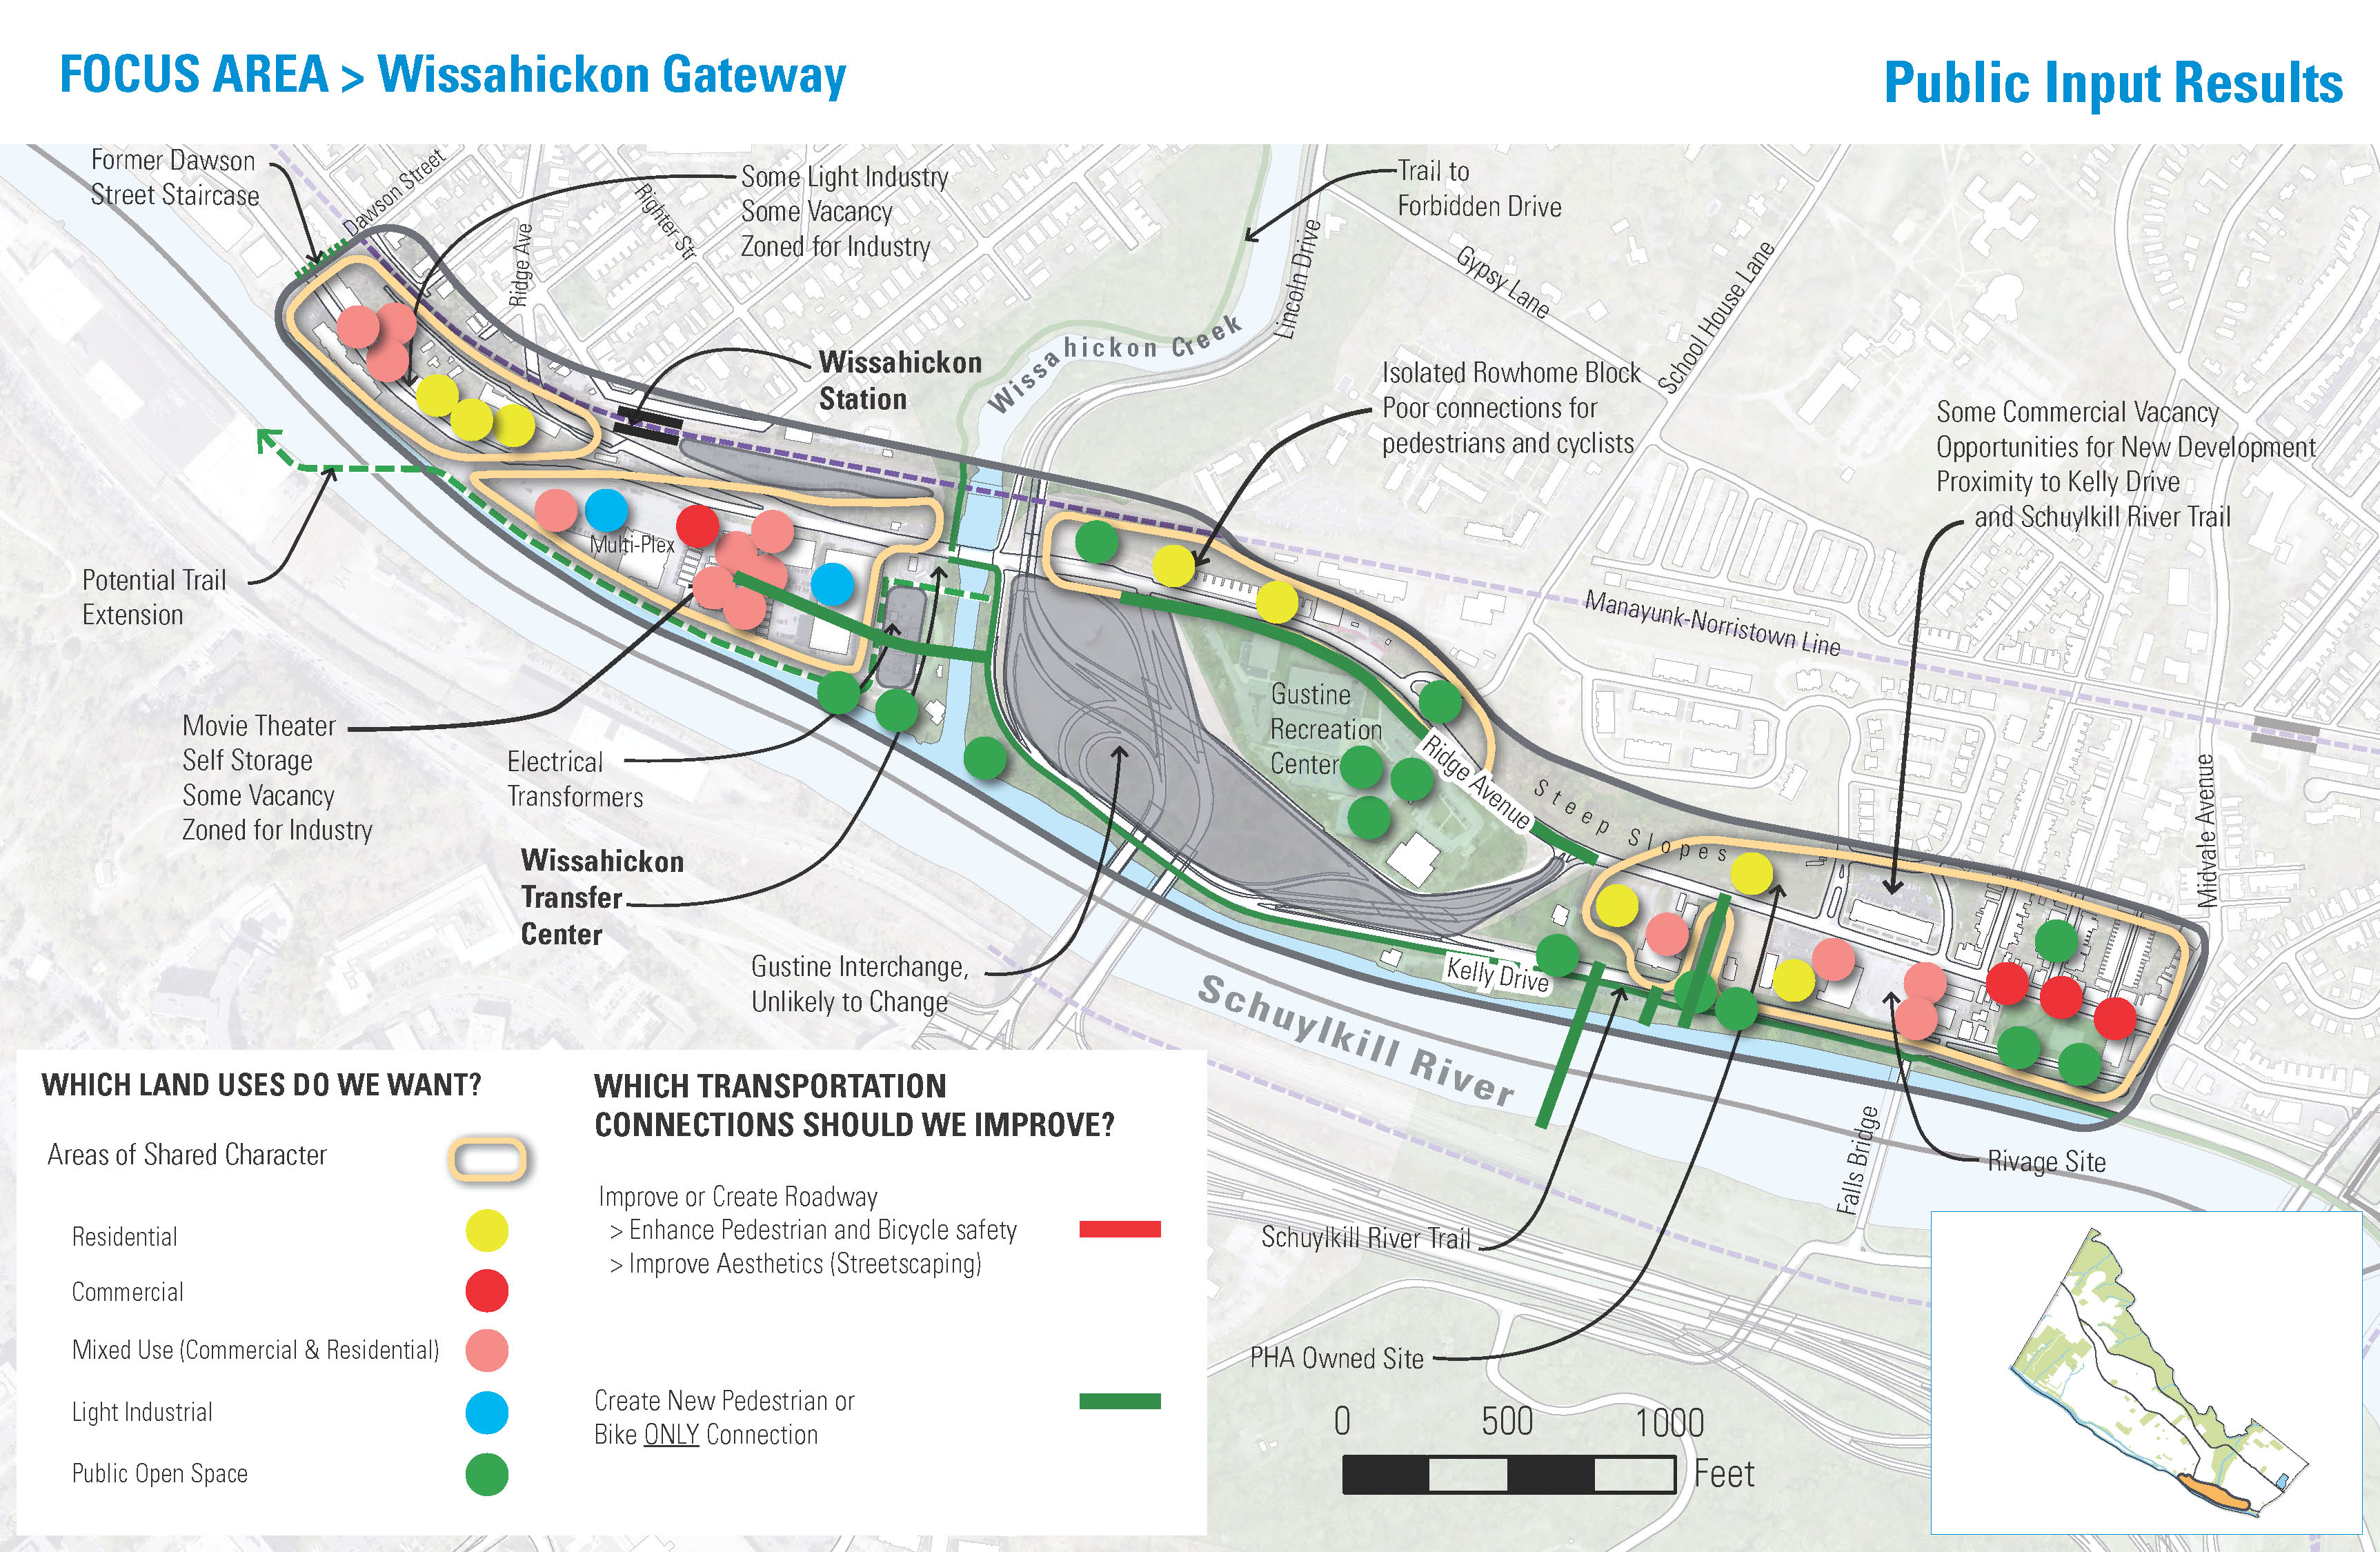 Visual summary of Lower Northwest input, Wissahickon Gateway